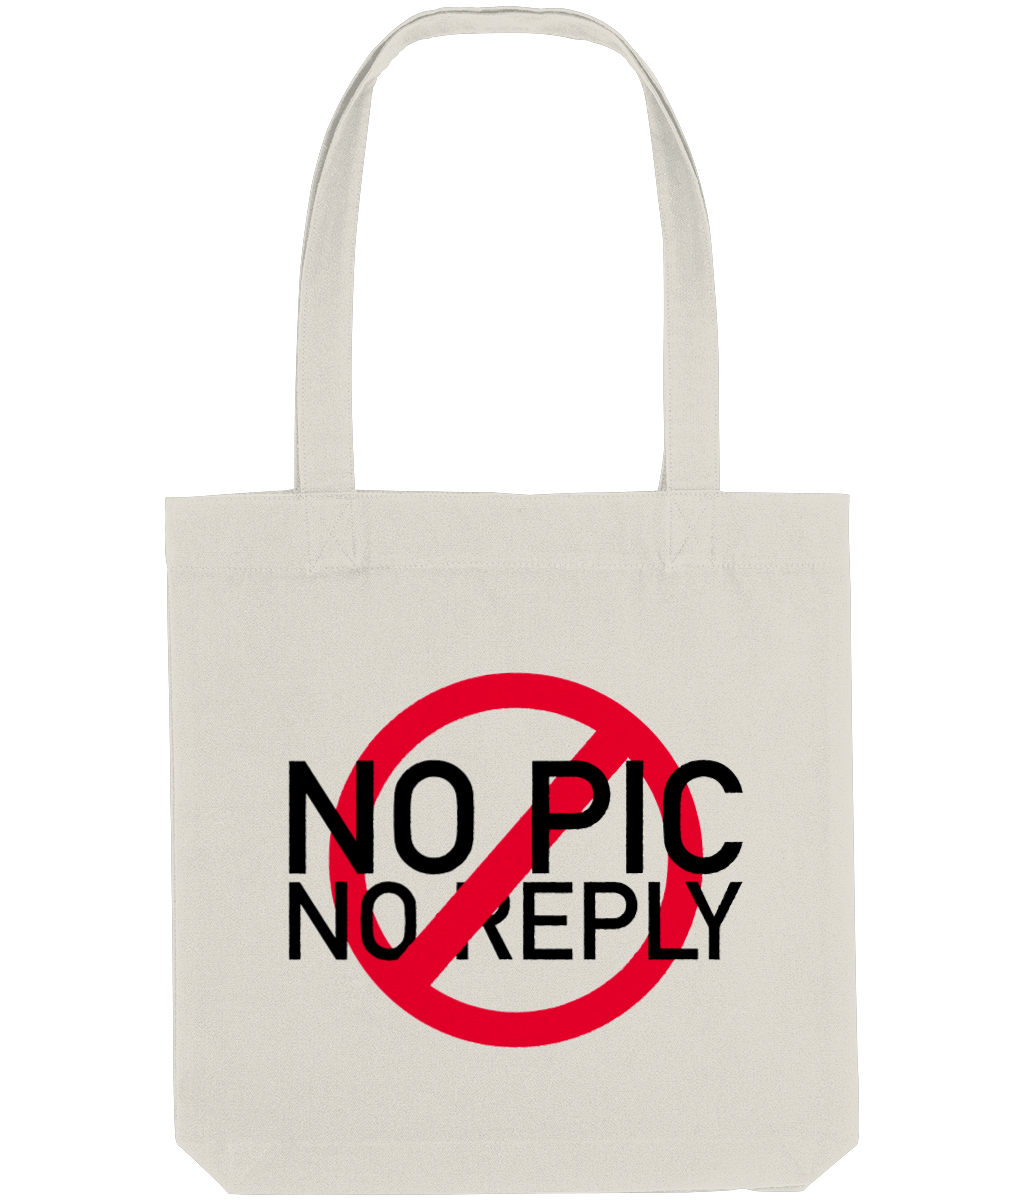 No Pic No Reply Tote Bag